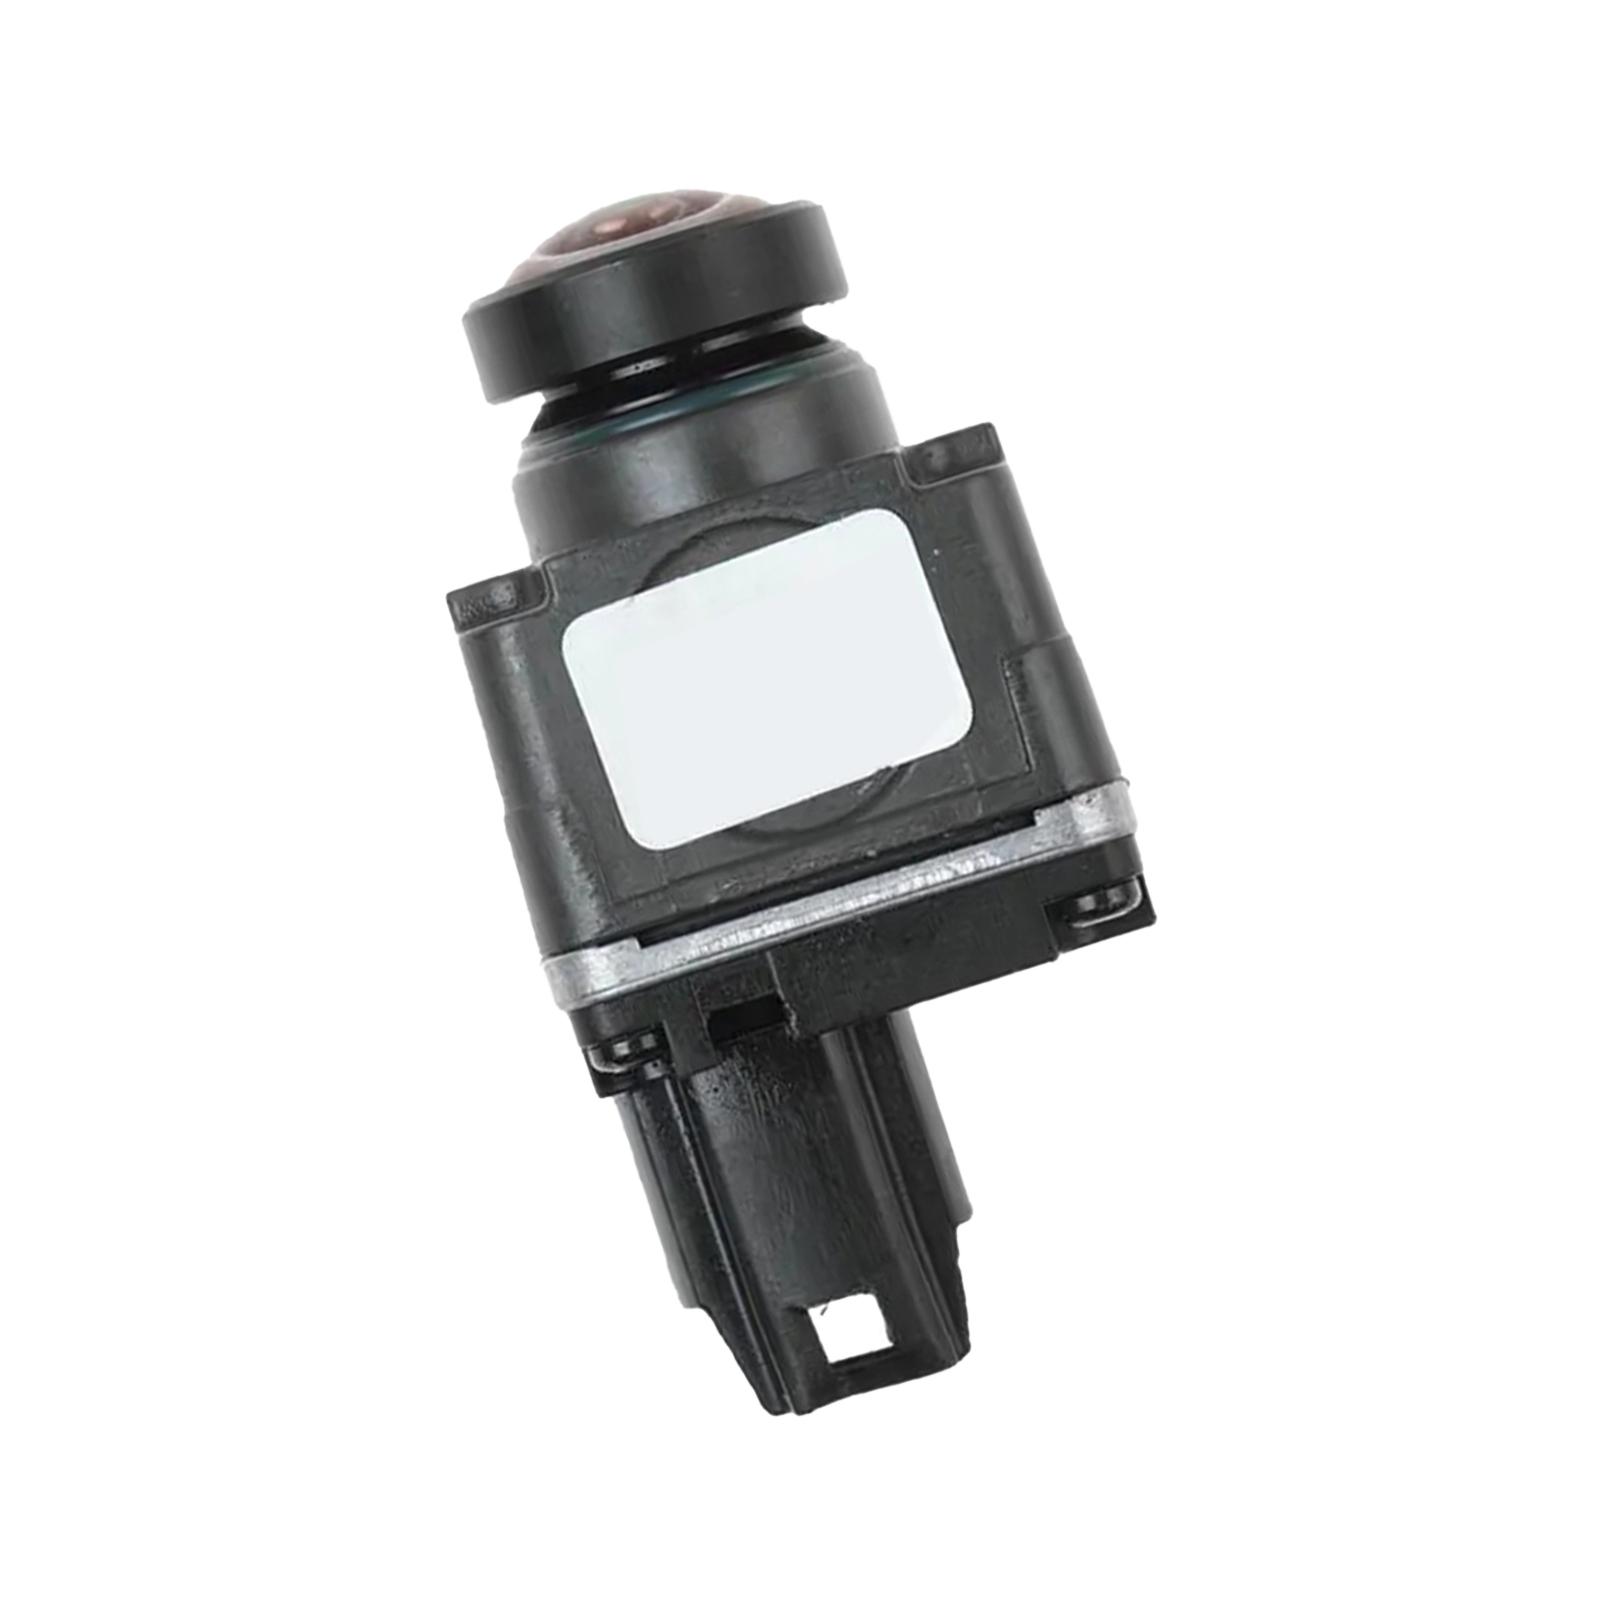 Vehicle Backup Camera Easy Installation Waterproof for Adudi A8 Q7 C7